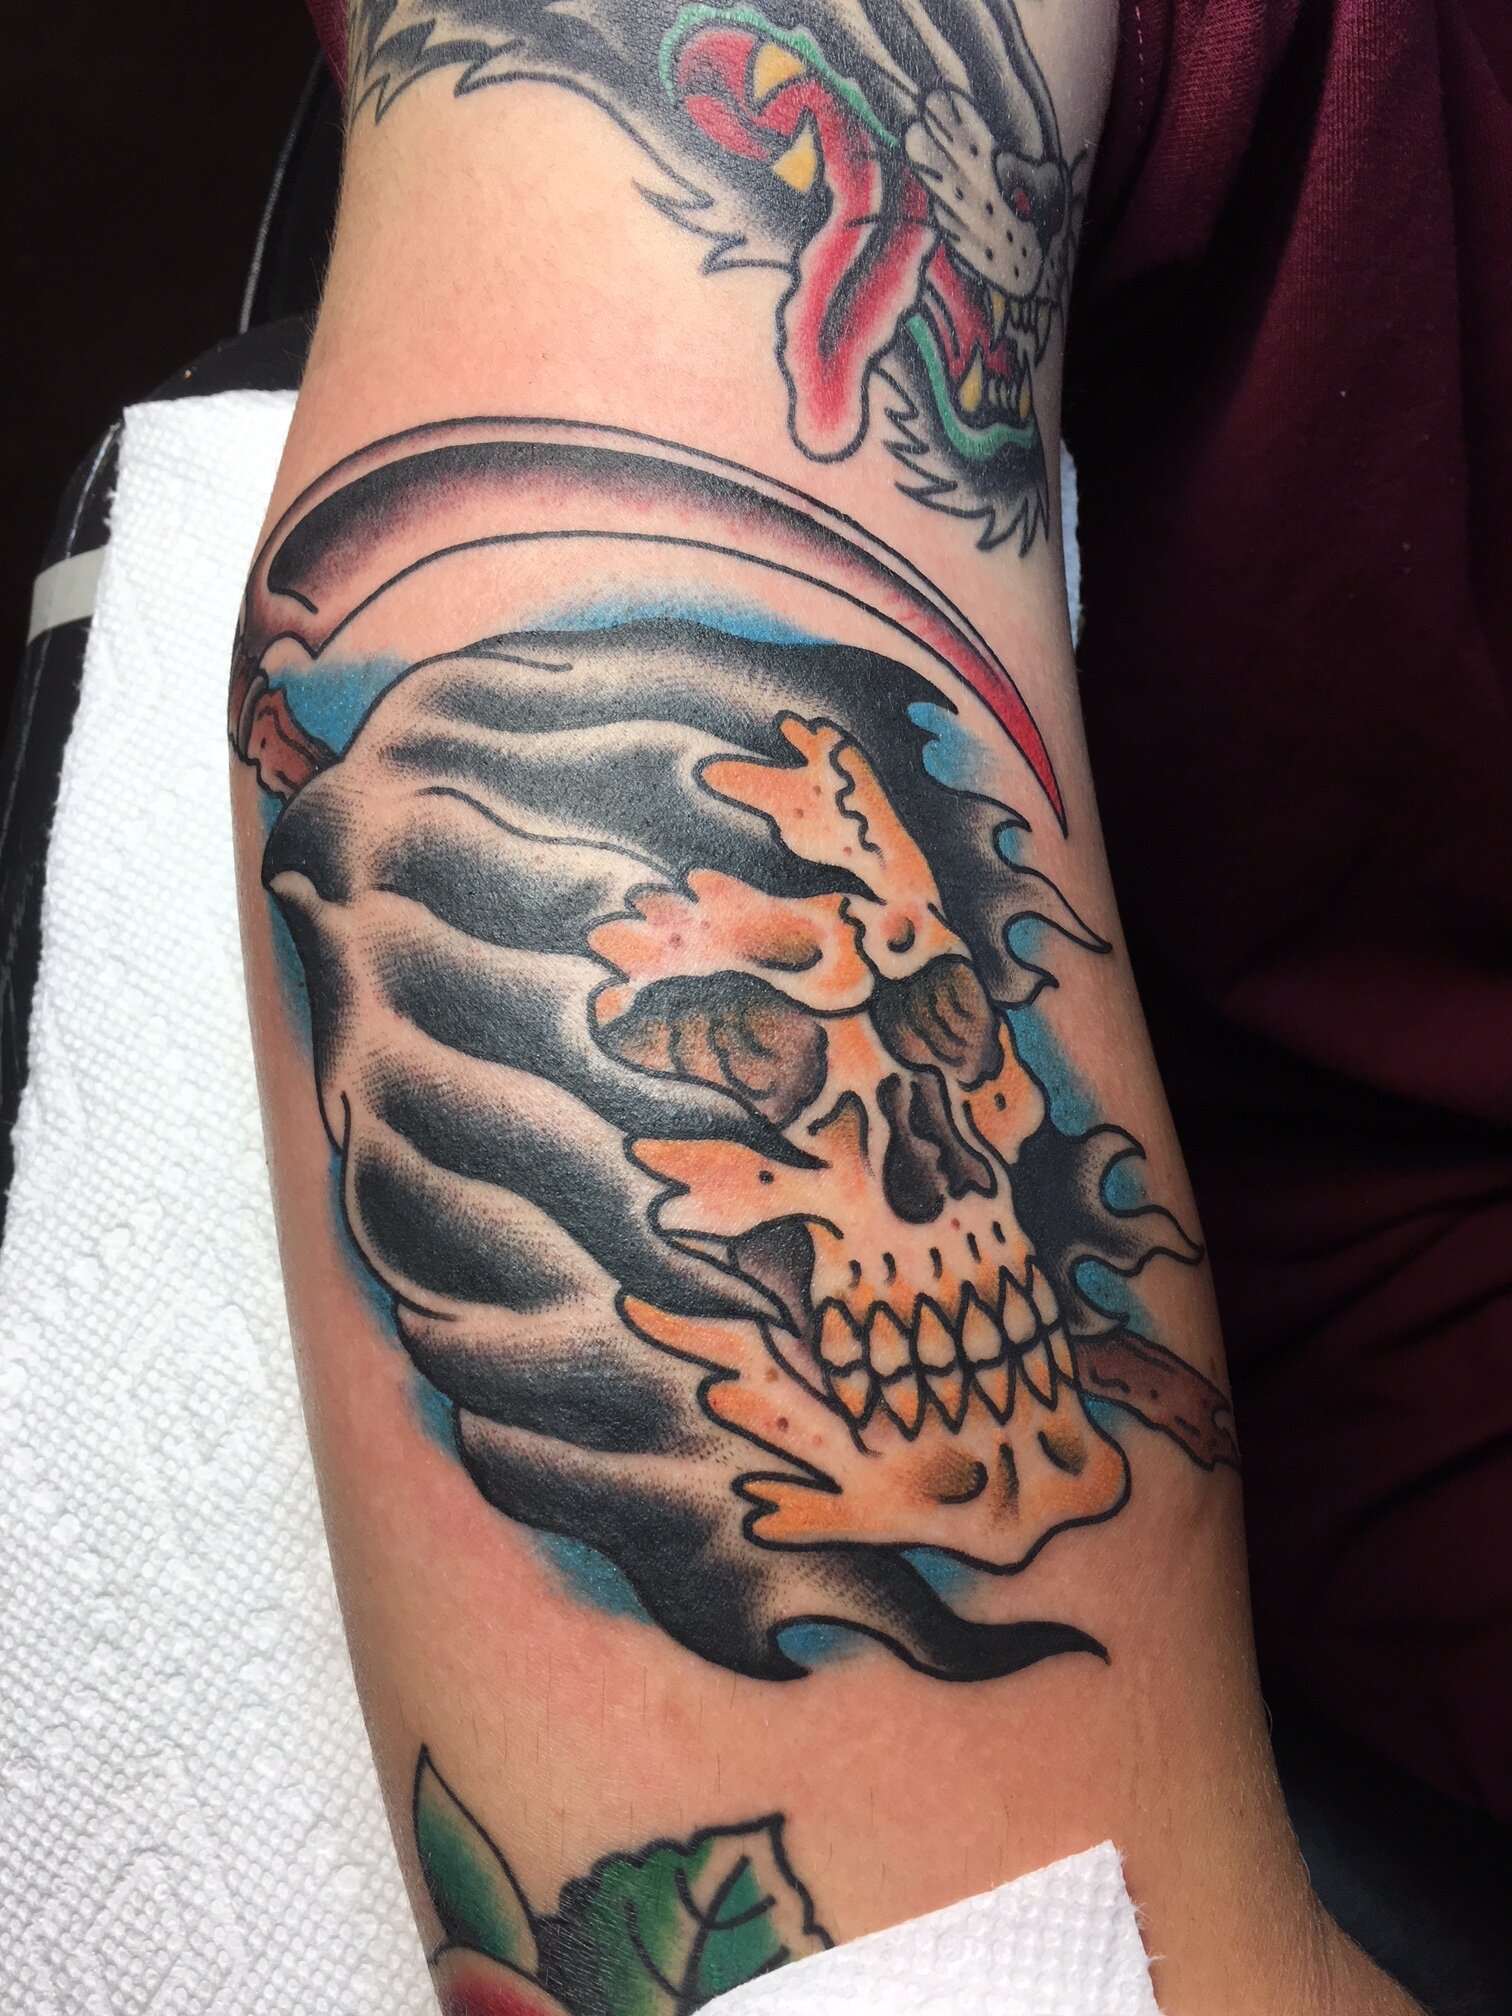 Skull tattoo in color by Brian Gattis at Southern Star Tattoo in Atlanta, Georgia